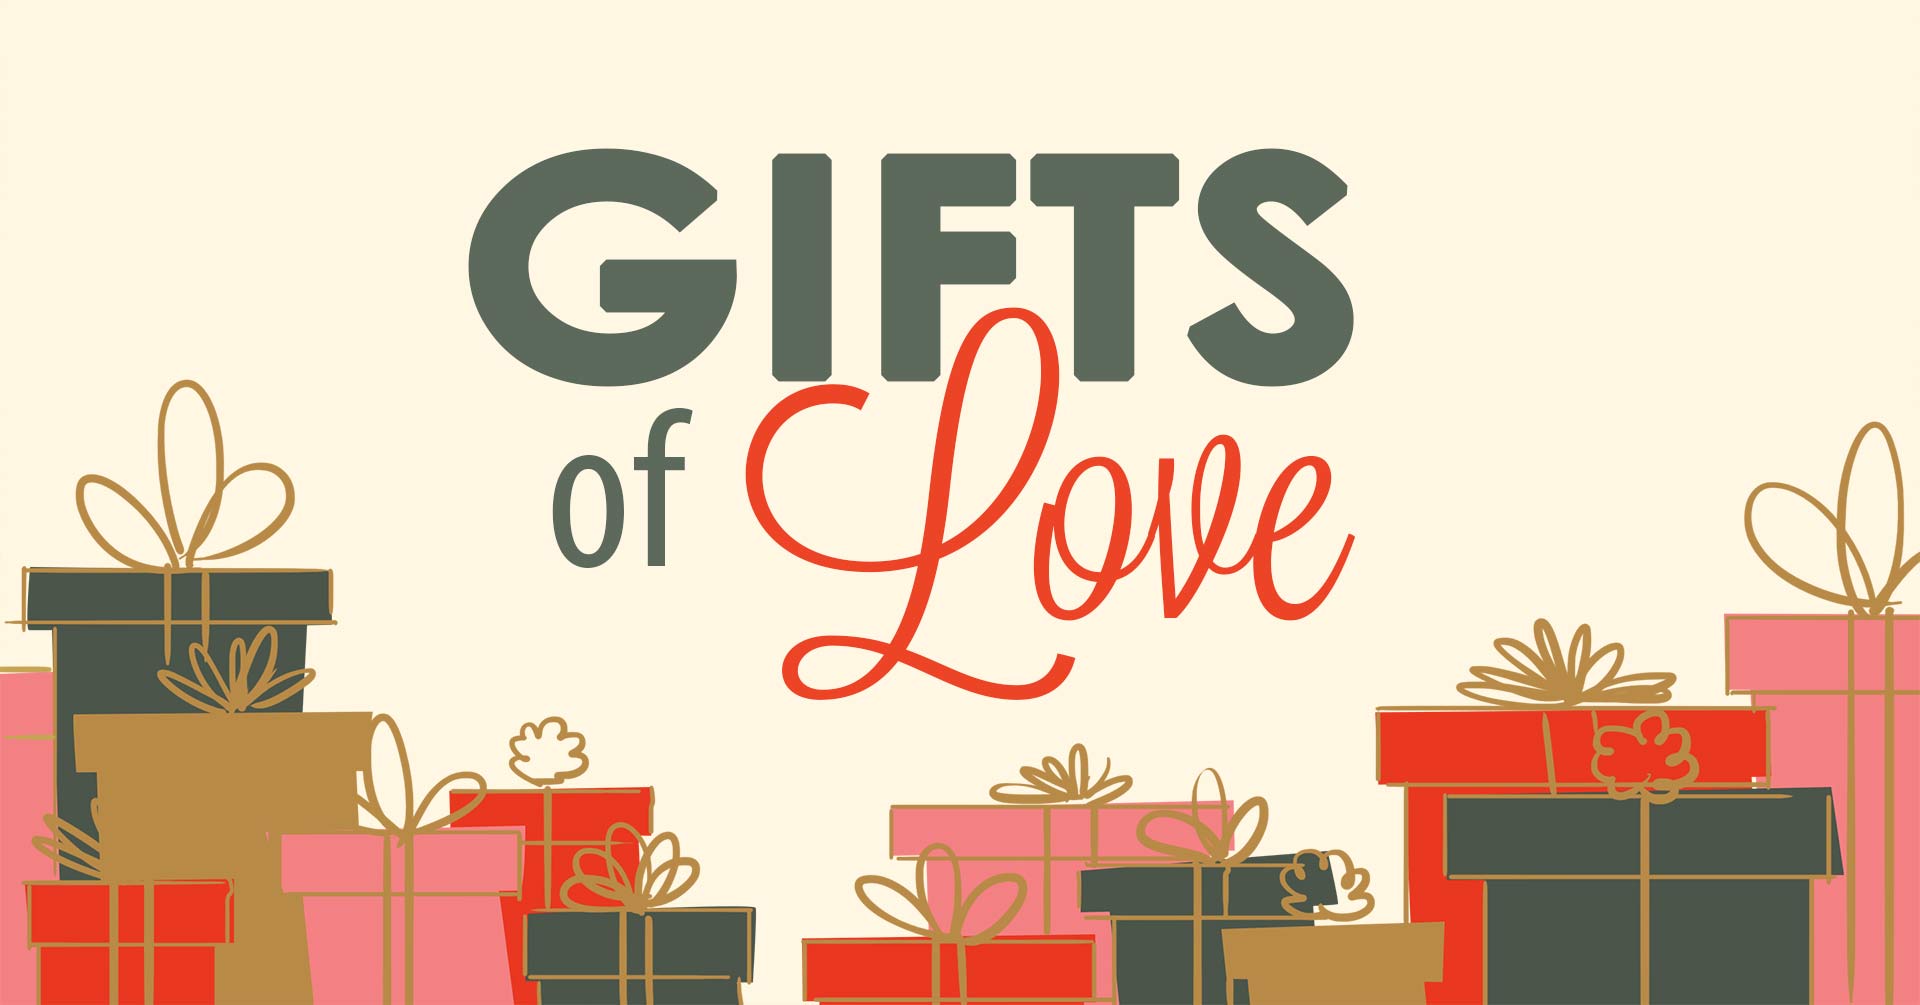 https://waysidechapel.org/wp-content/uploads/2016/10/gifts-of-love-web.jpg